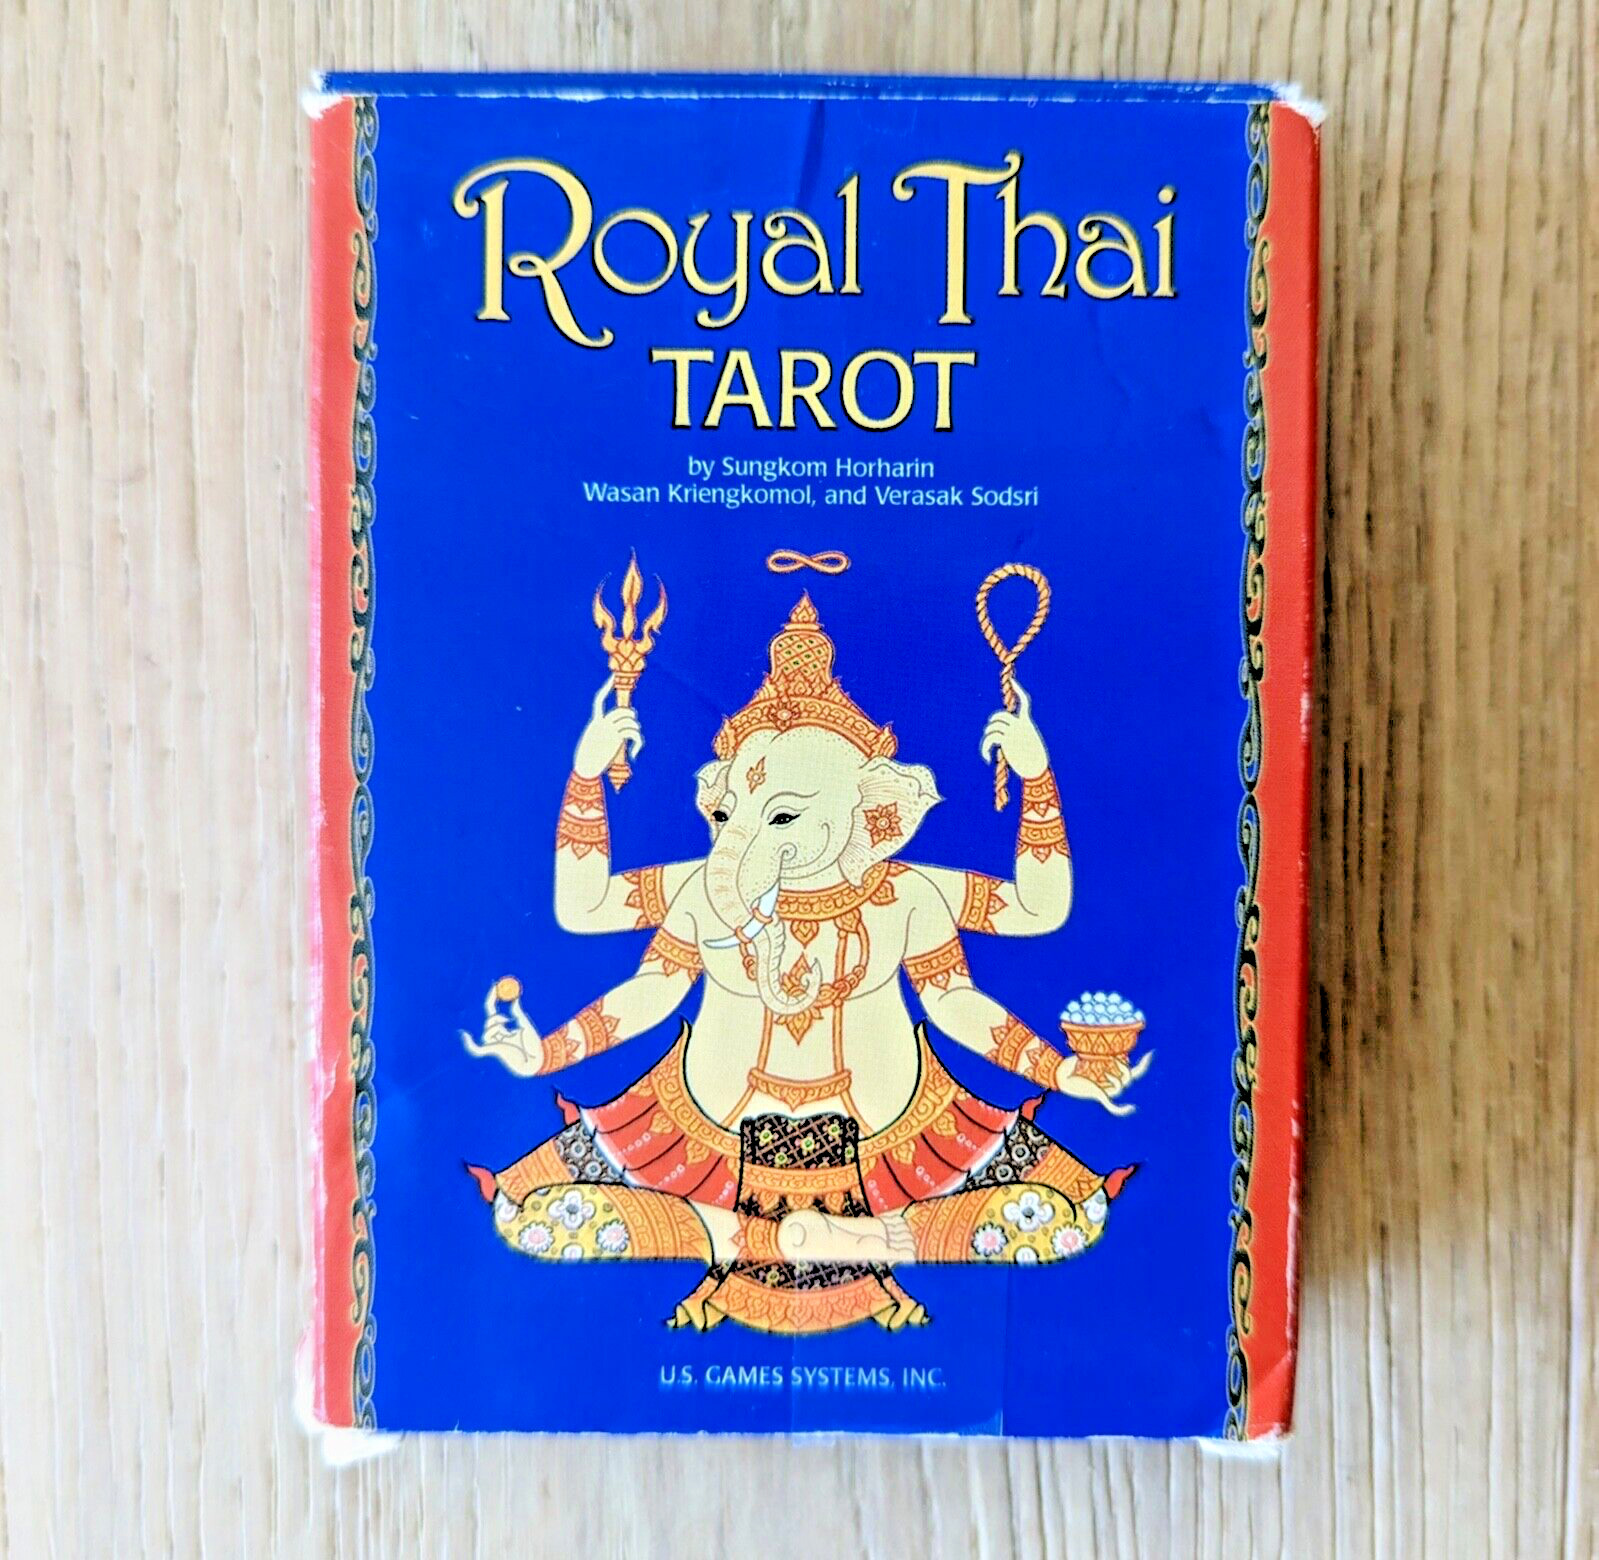 Royal Thai Tarot Card Deck 2004 by Sungkom Horharin US Games Systems